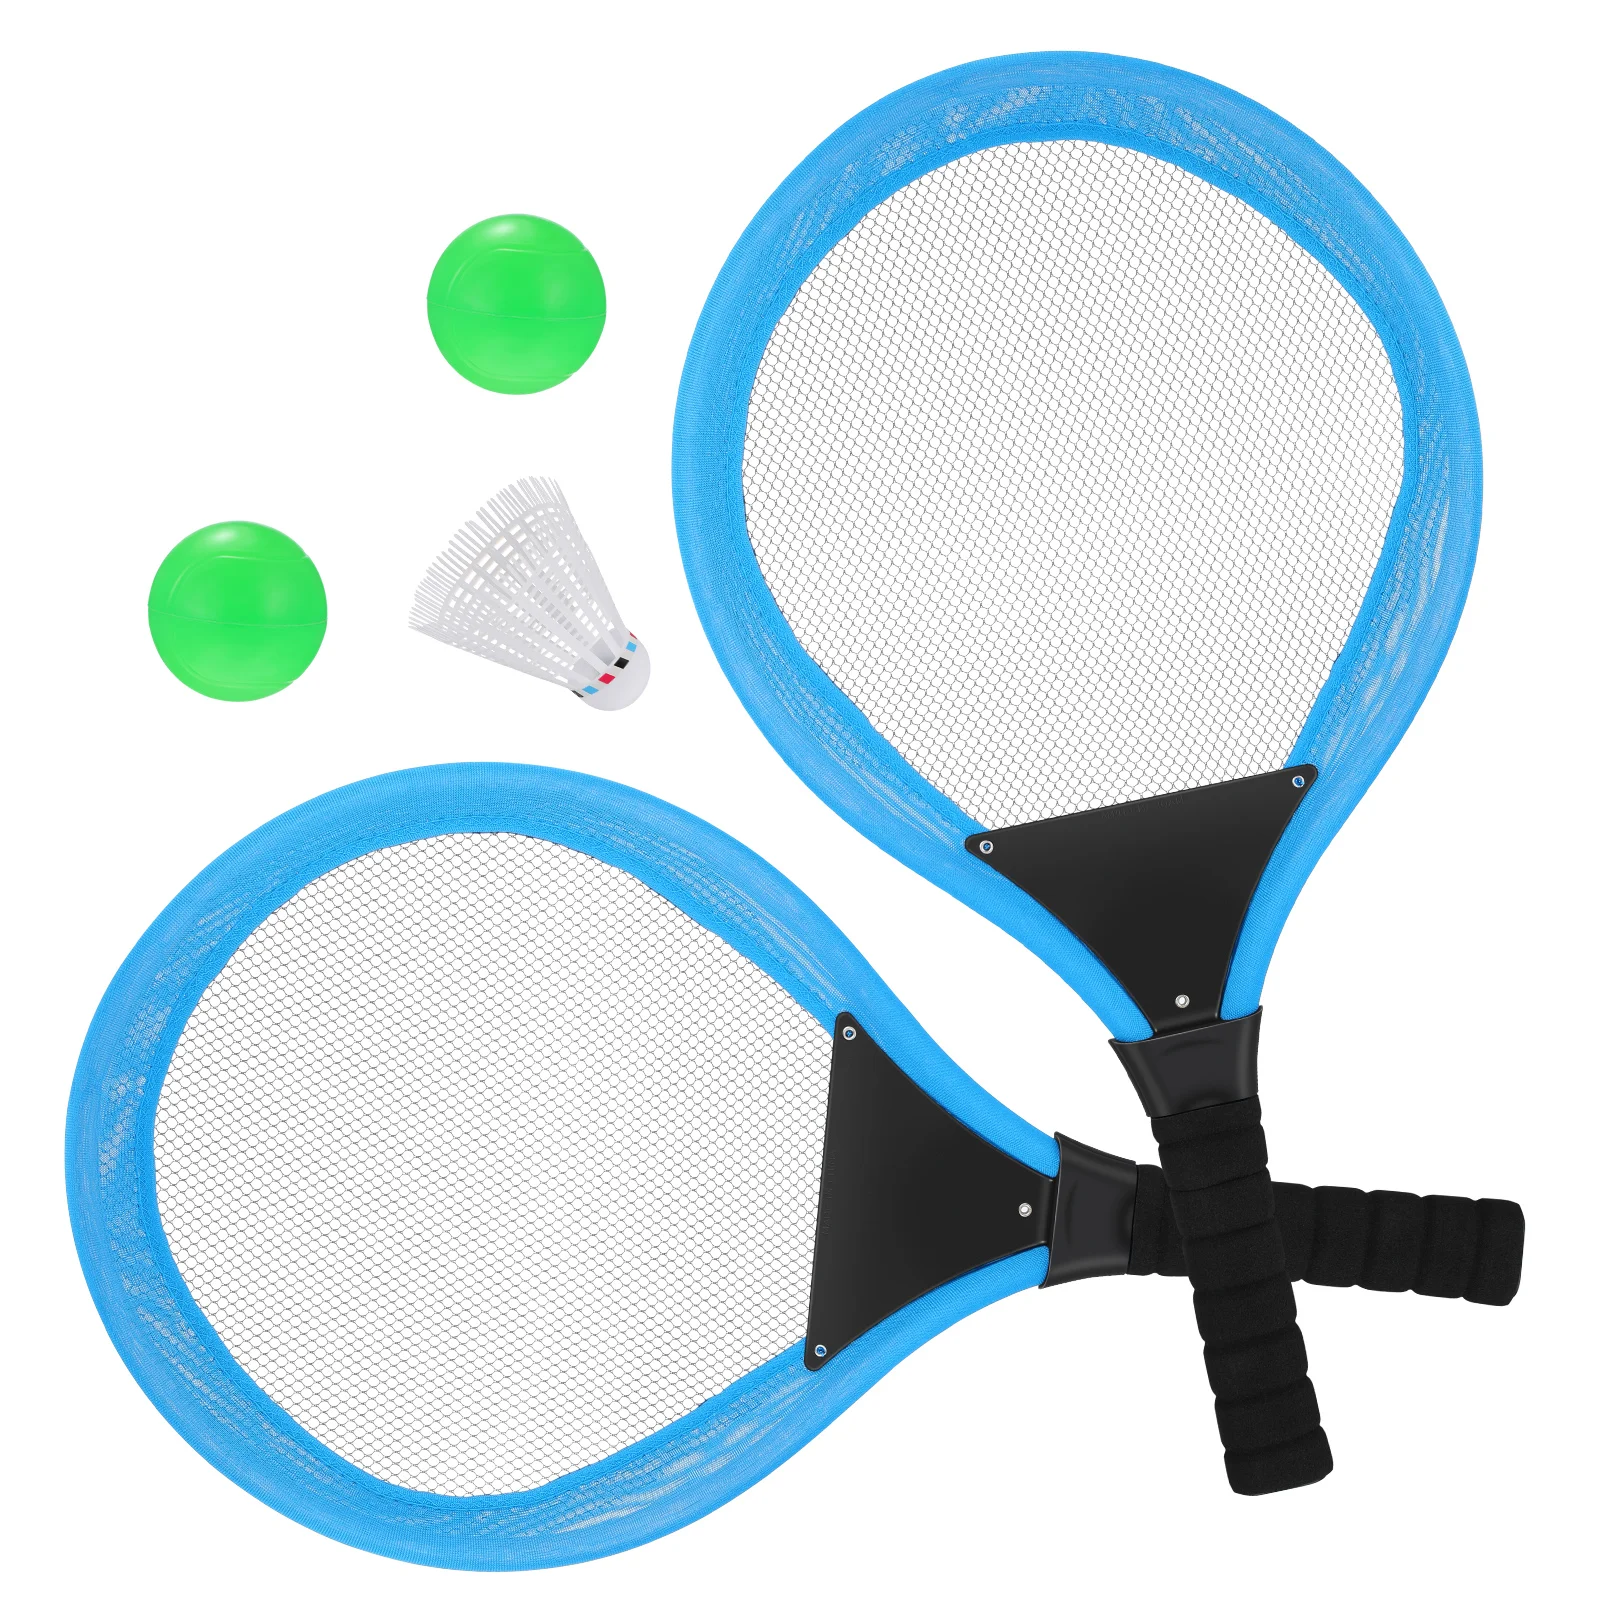 

1 Set Badminton Rackets Kids Tennis Rackets Training Tool Outdoor Sports Playing Toy Set With Three Balls Elastic Mesh Racket